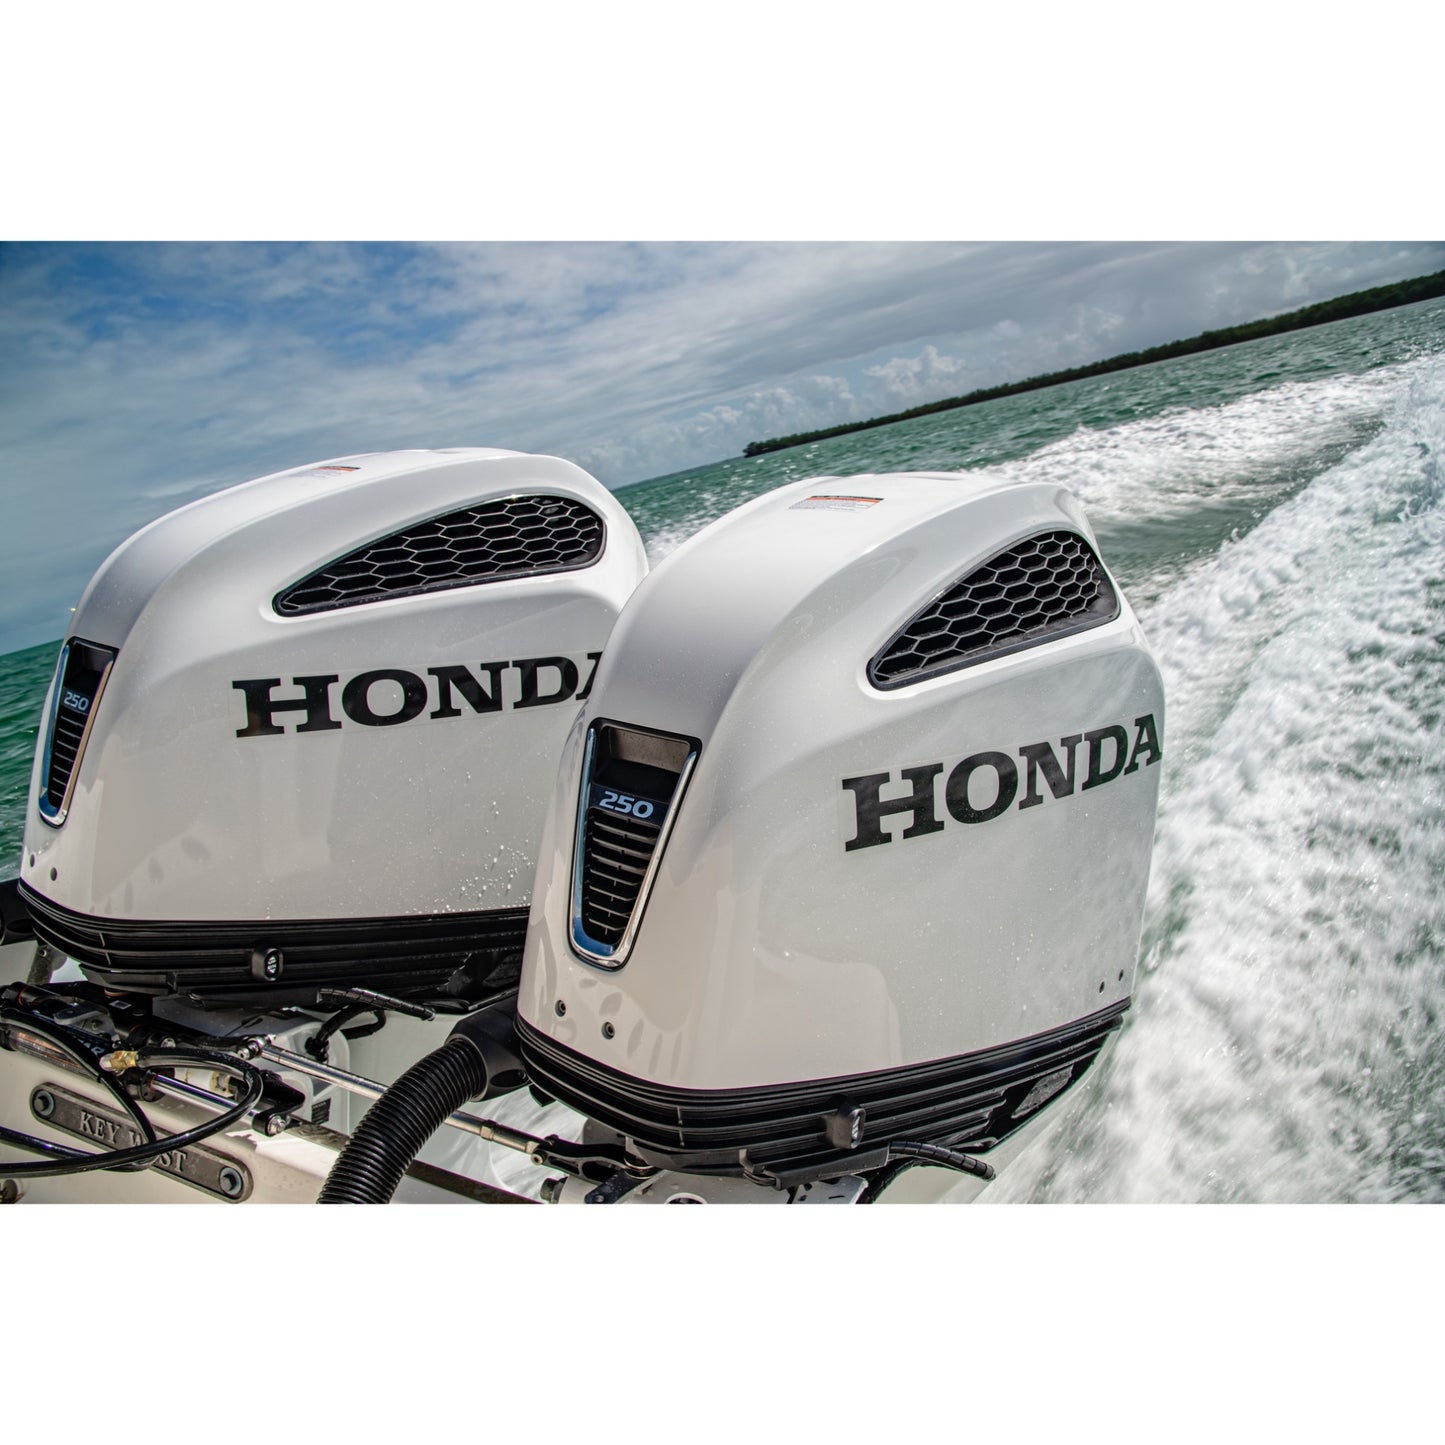 Honda Marine Outboard | BF250IST | Large-Size | 4-stroke